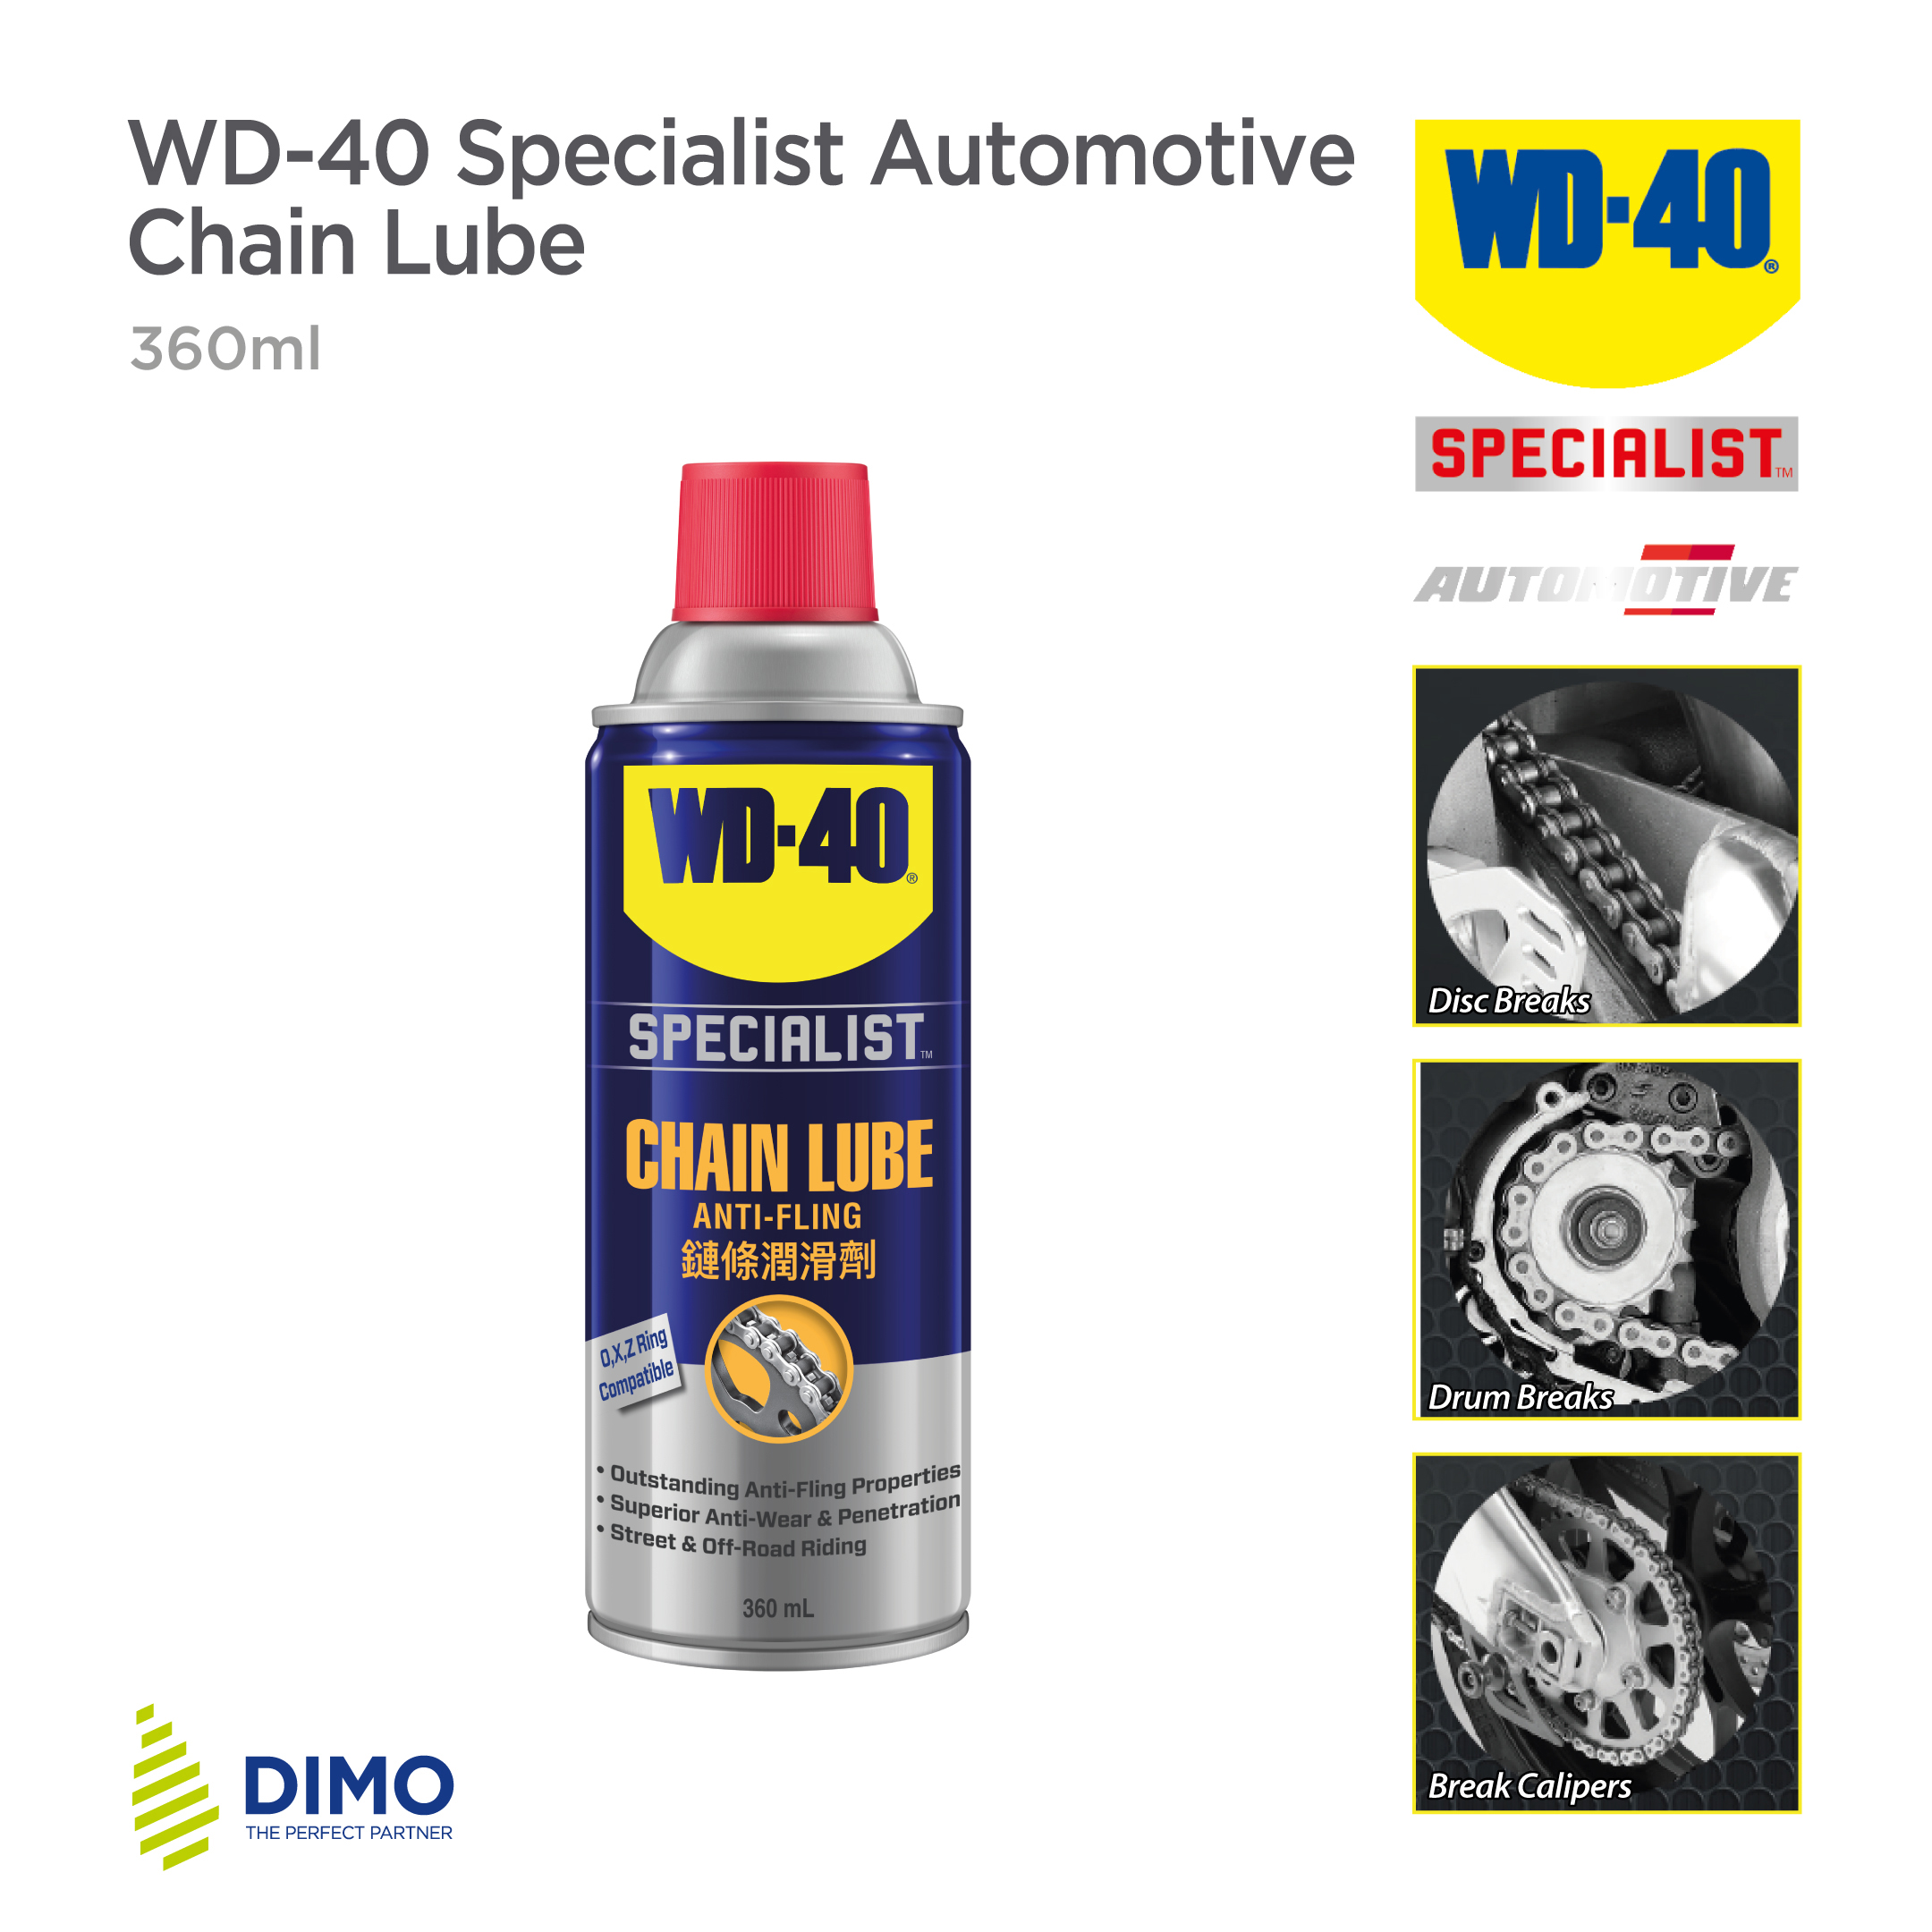 WD-40-Specialist-Automotive-Chain-Lube-360ml copy